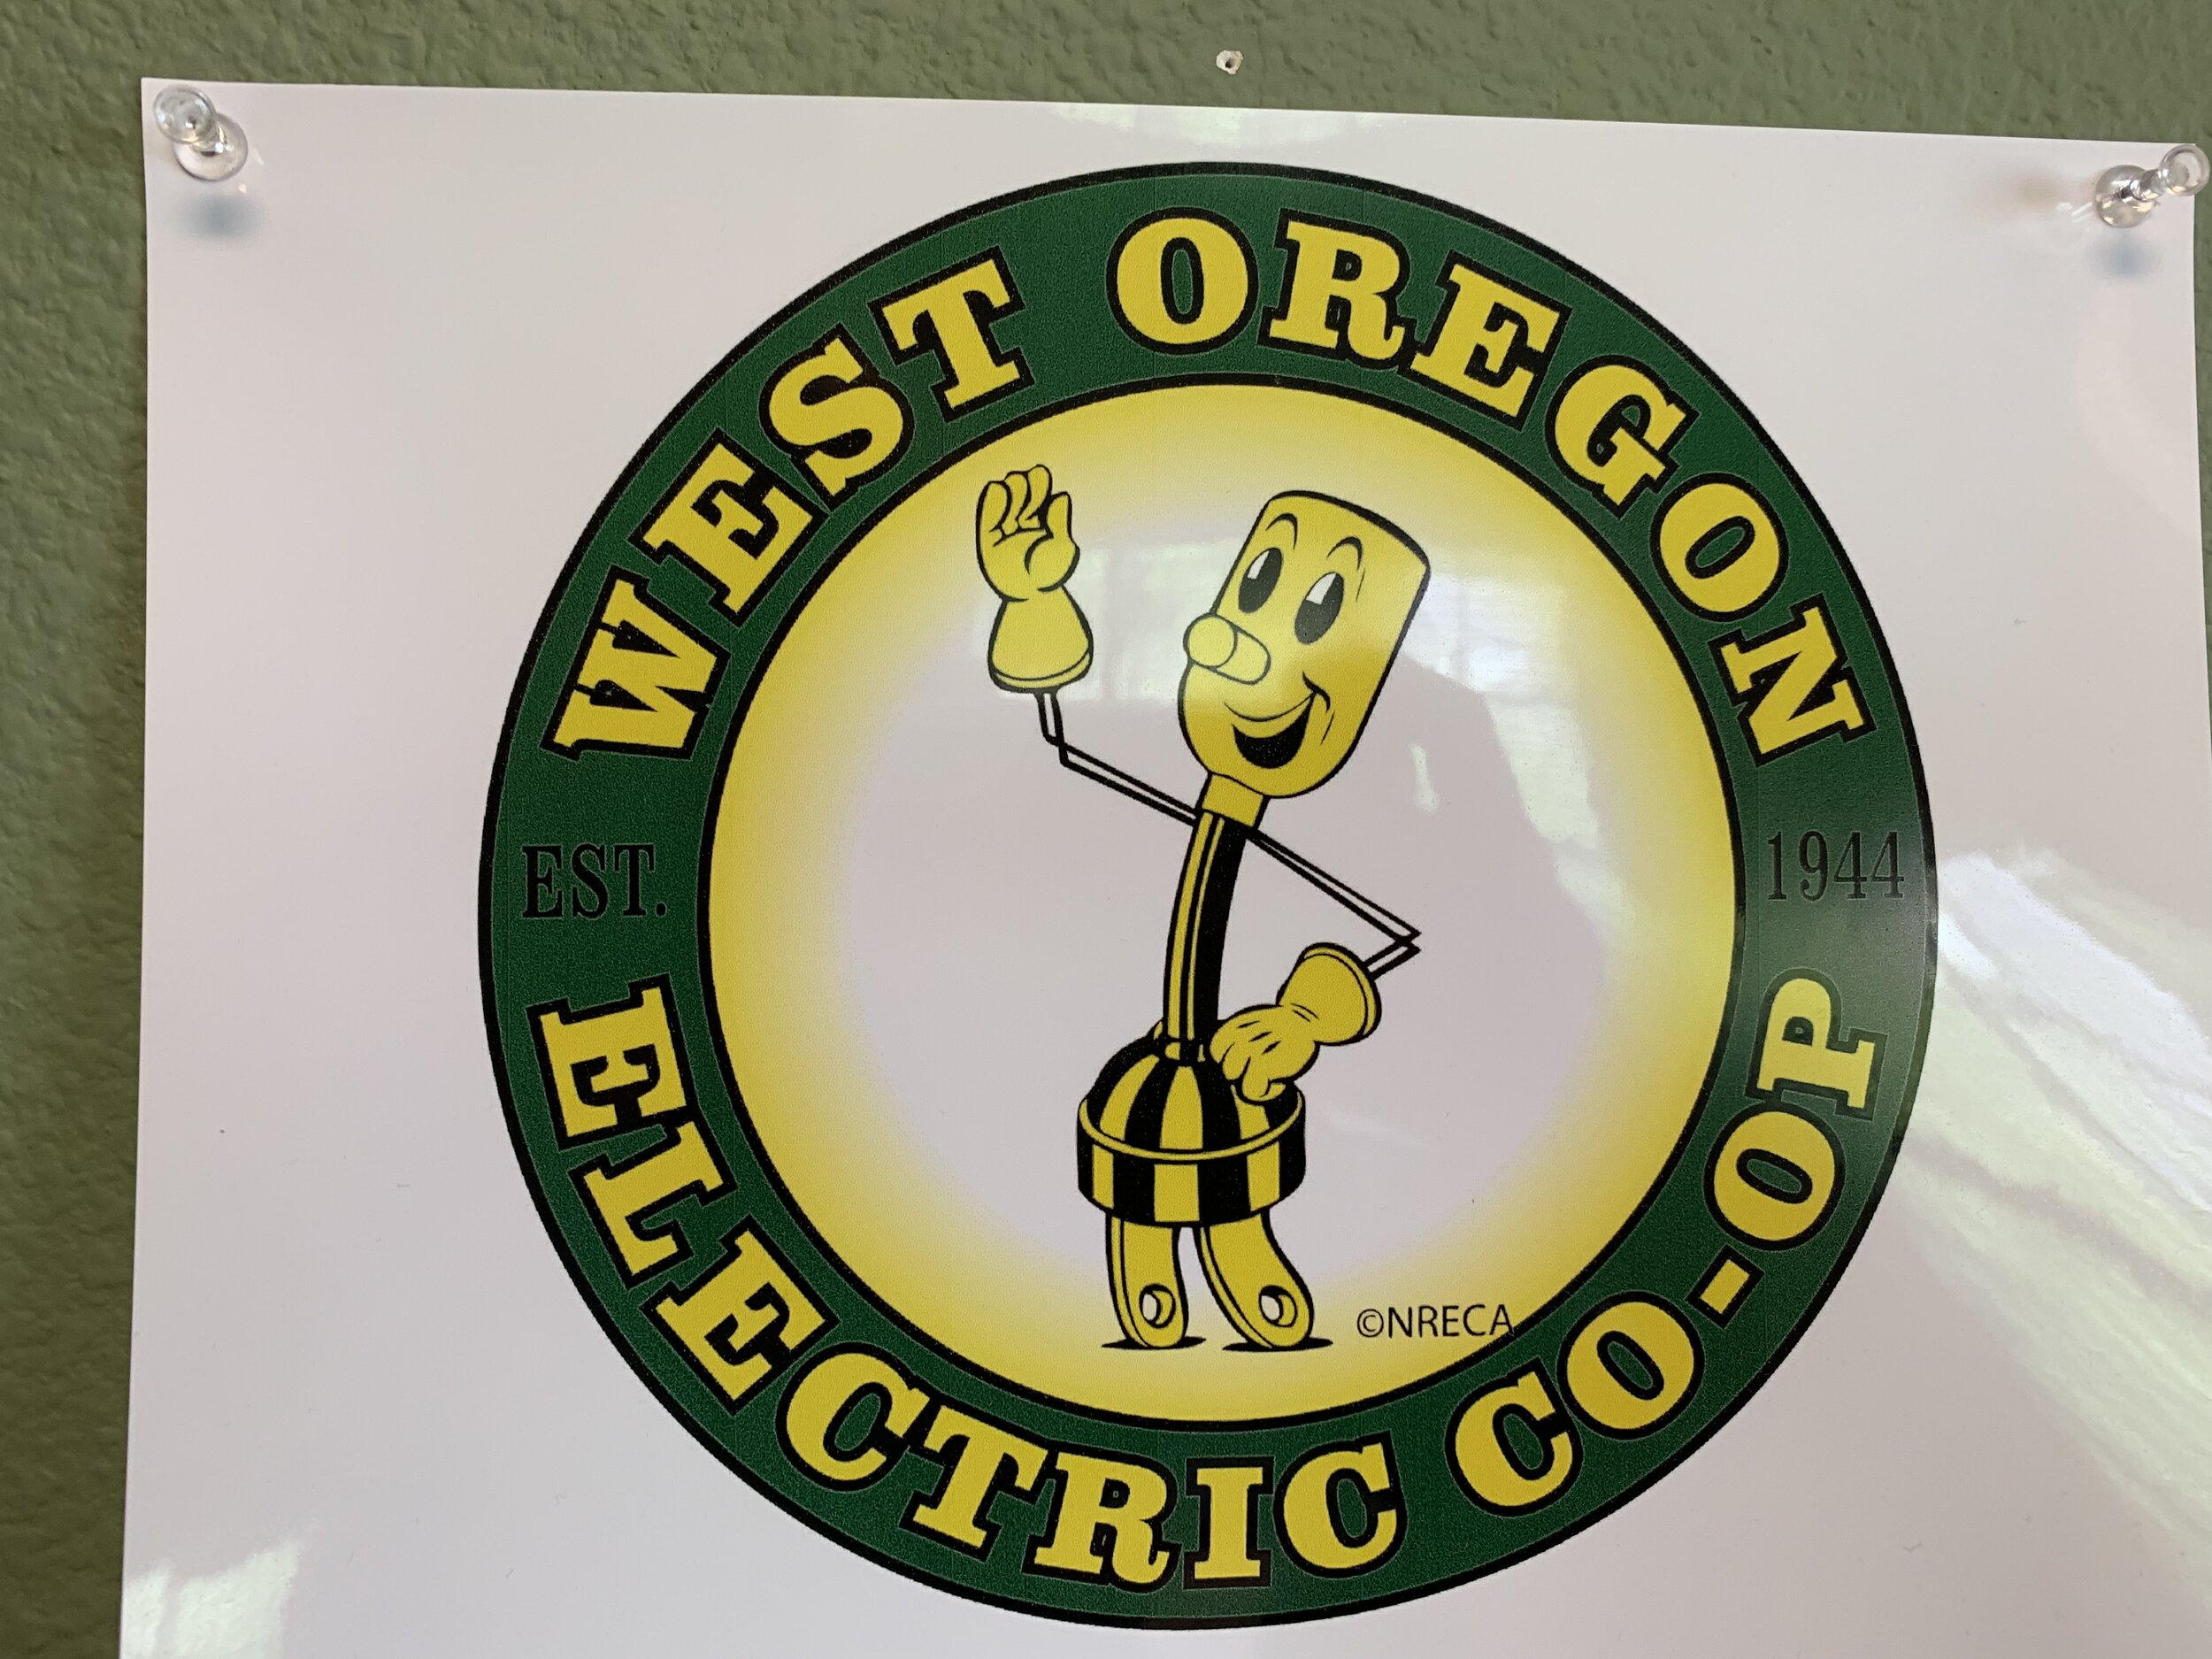 West Oregon Electric Co-op's friendly logo